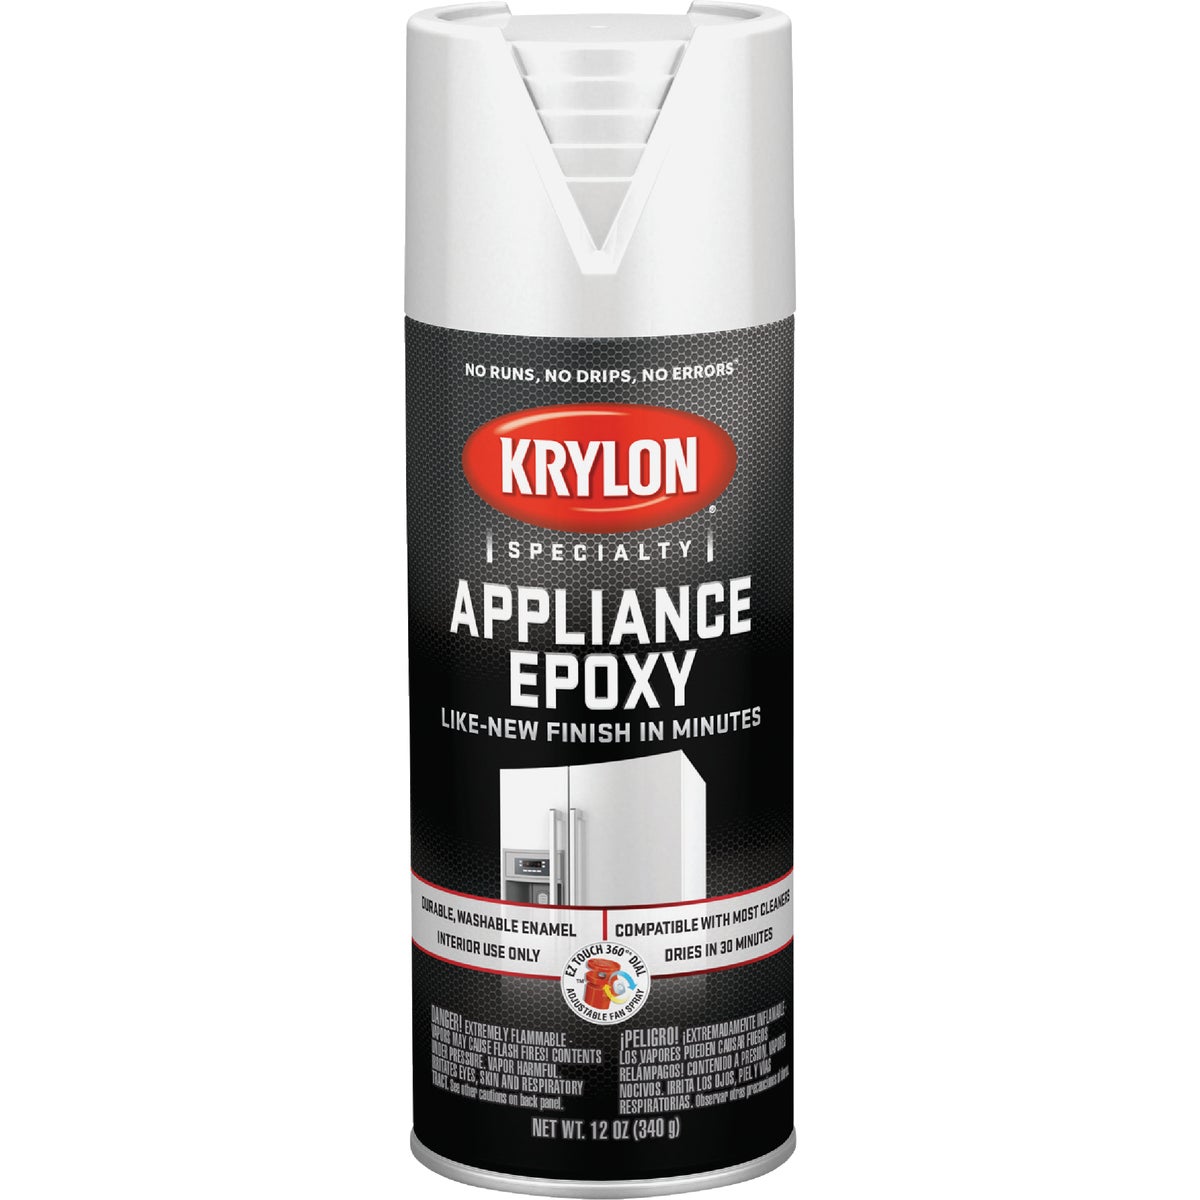 Krylon Gloss Epoxy White 12 Oz. Appliance Spray Paint